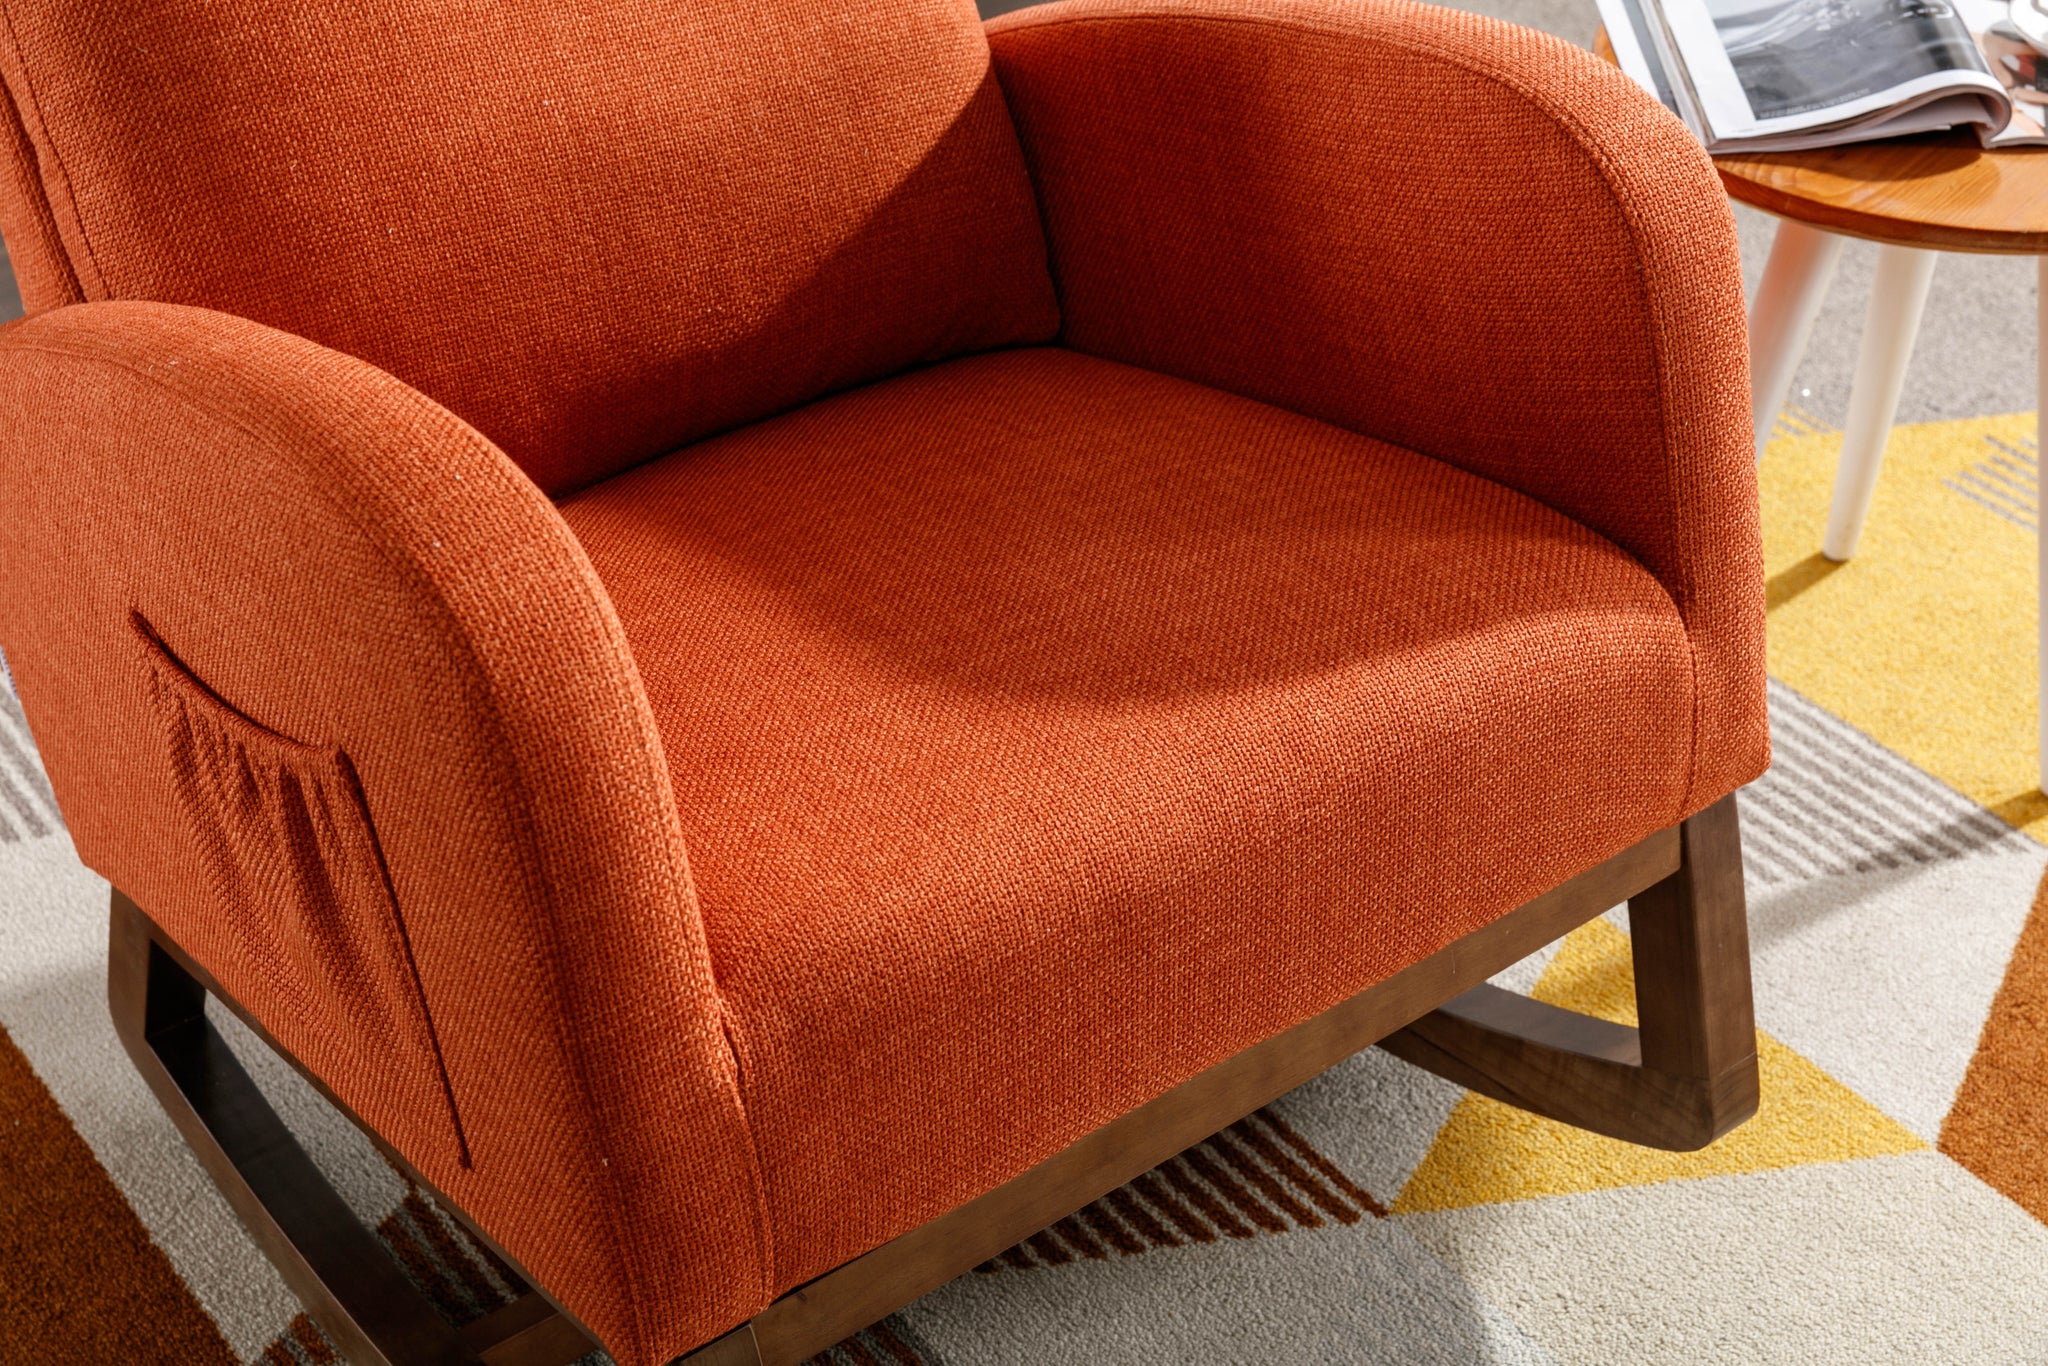 COOLMORE living room Comfortable rocking chair living orange-linen